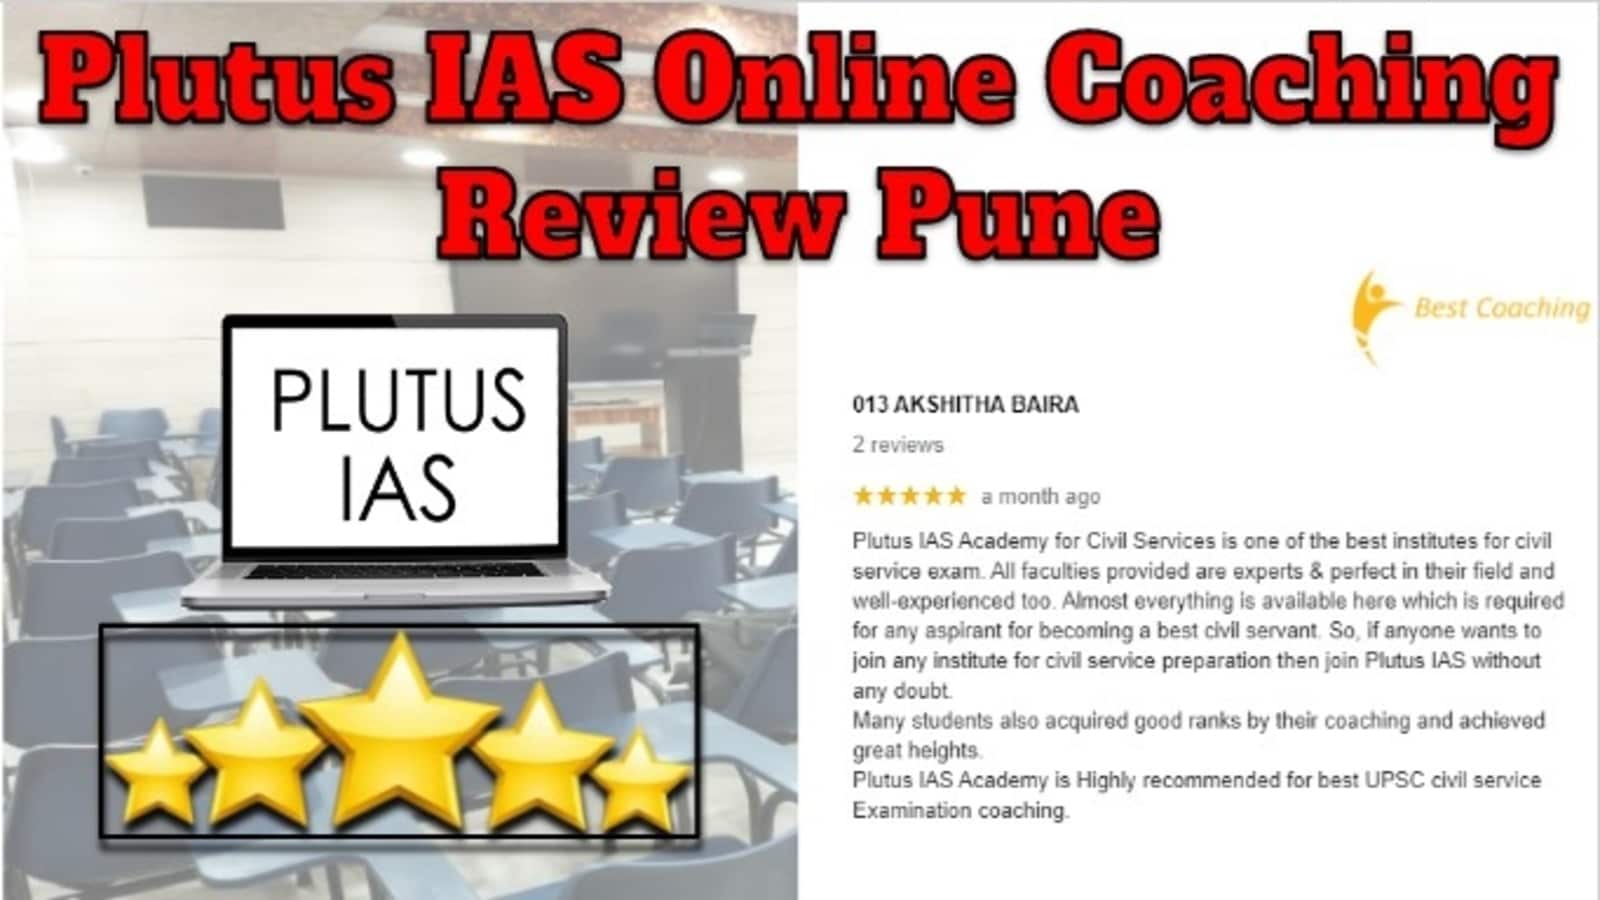 Plutus IAS Online Coaching Review Pune